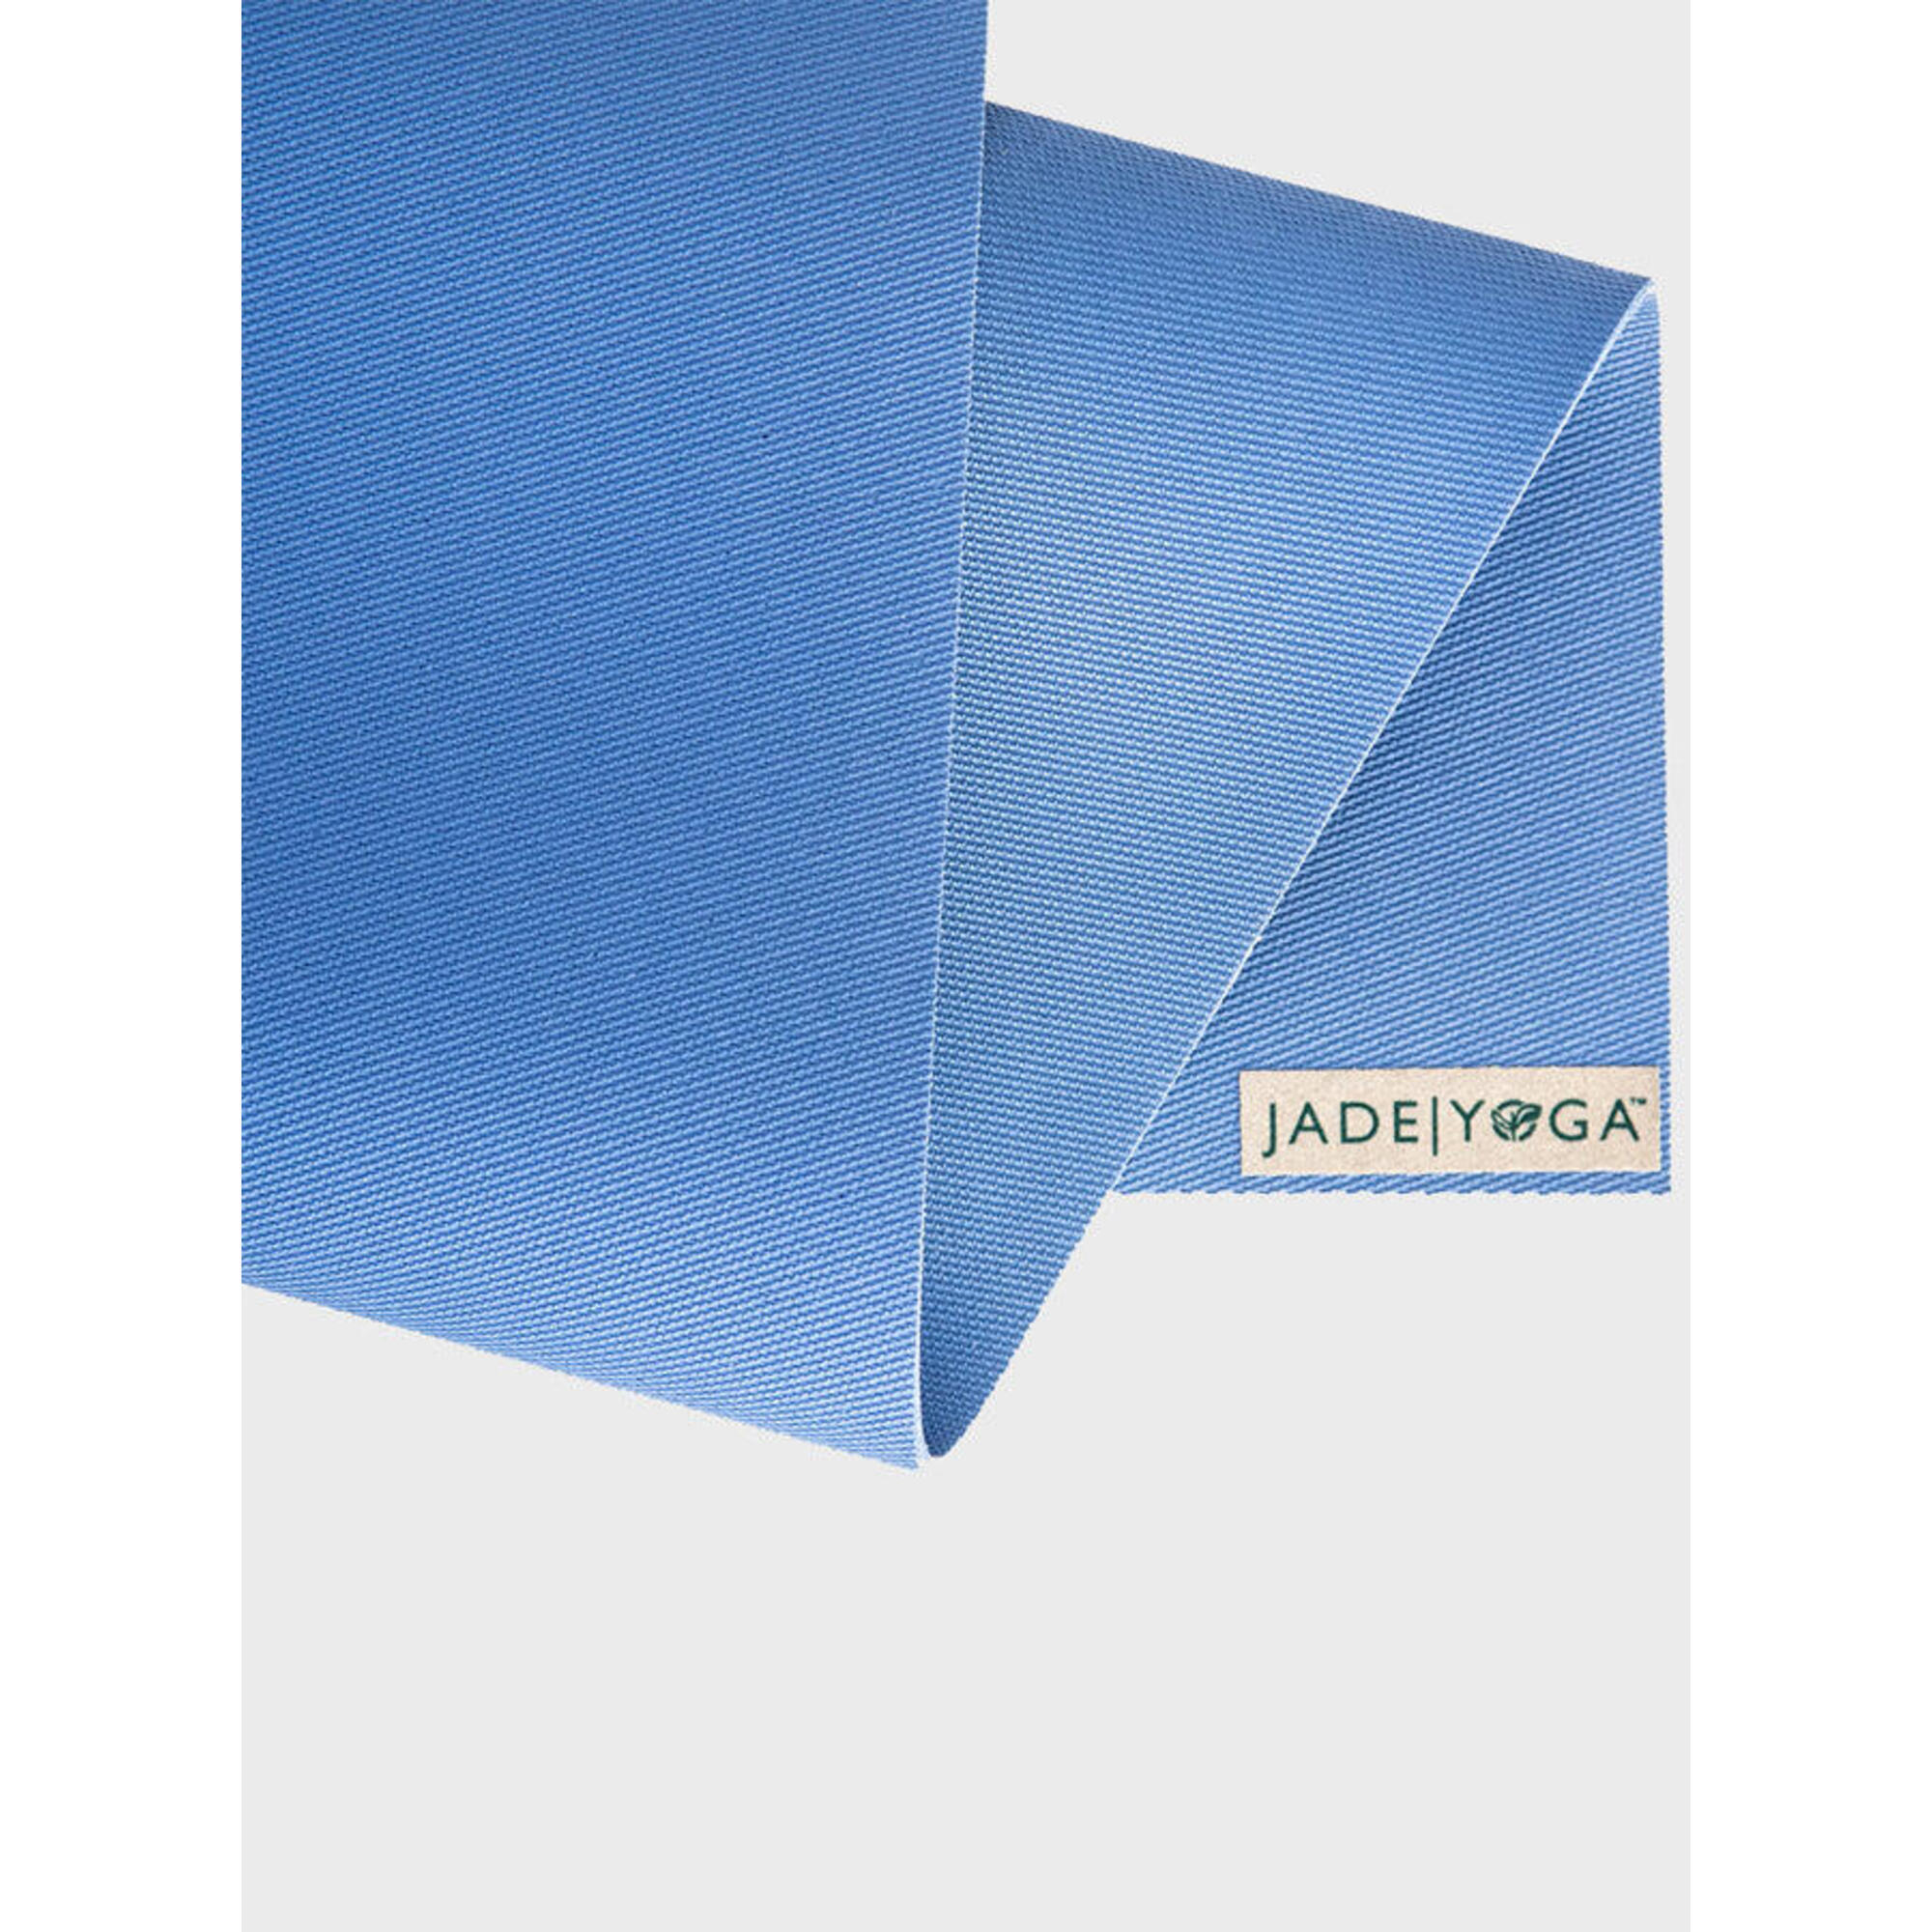 JADE YOGA Jade Yoga Harmony 68 Inch Yoga Mat 5mm - Slate Blue